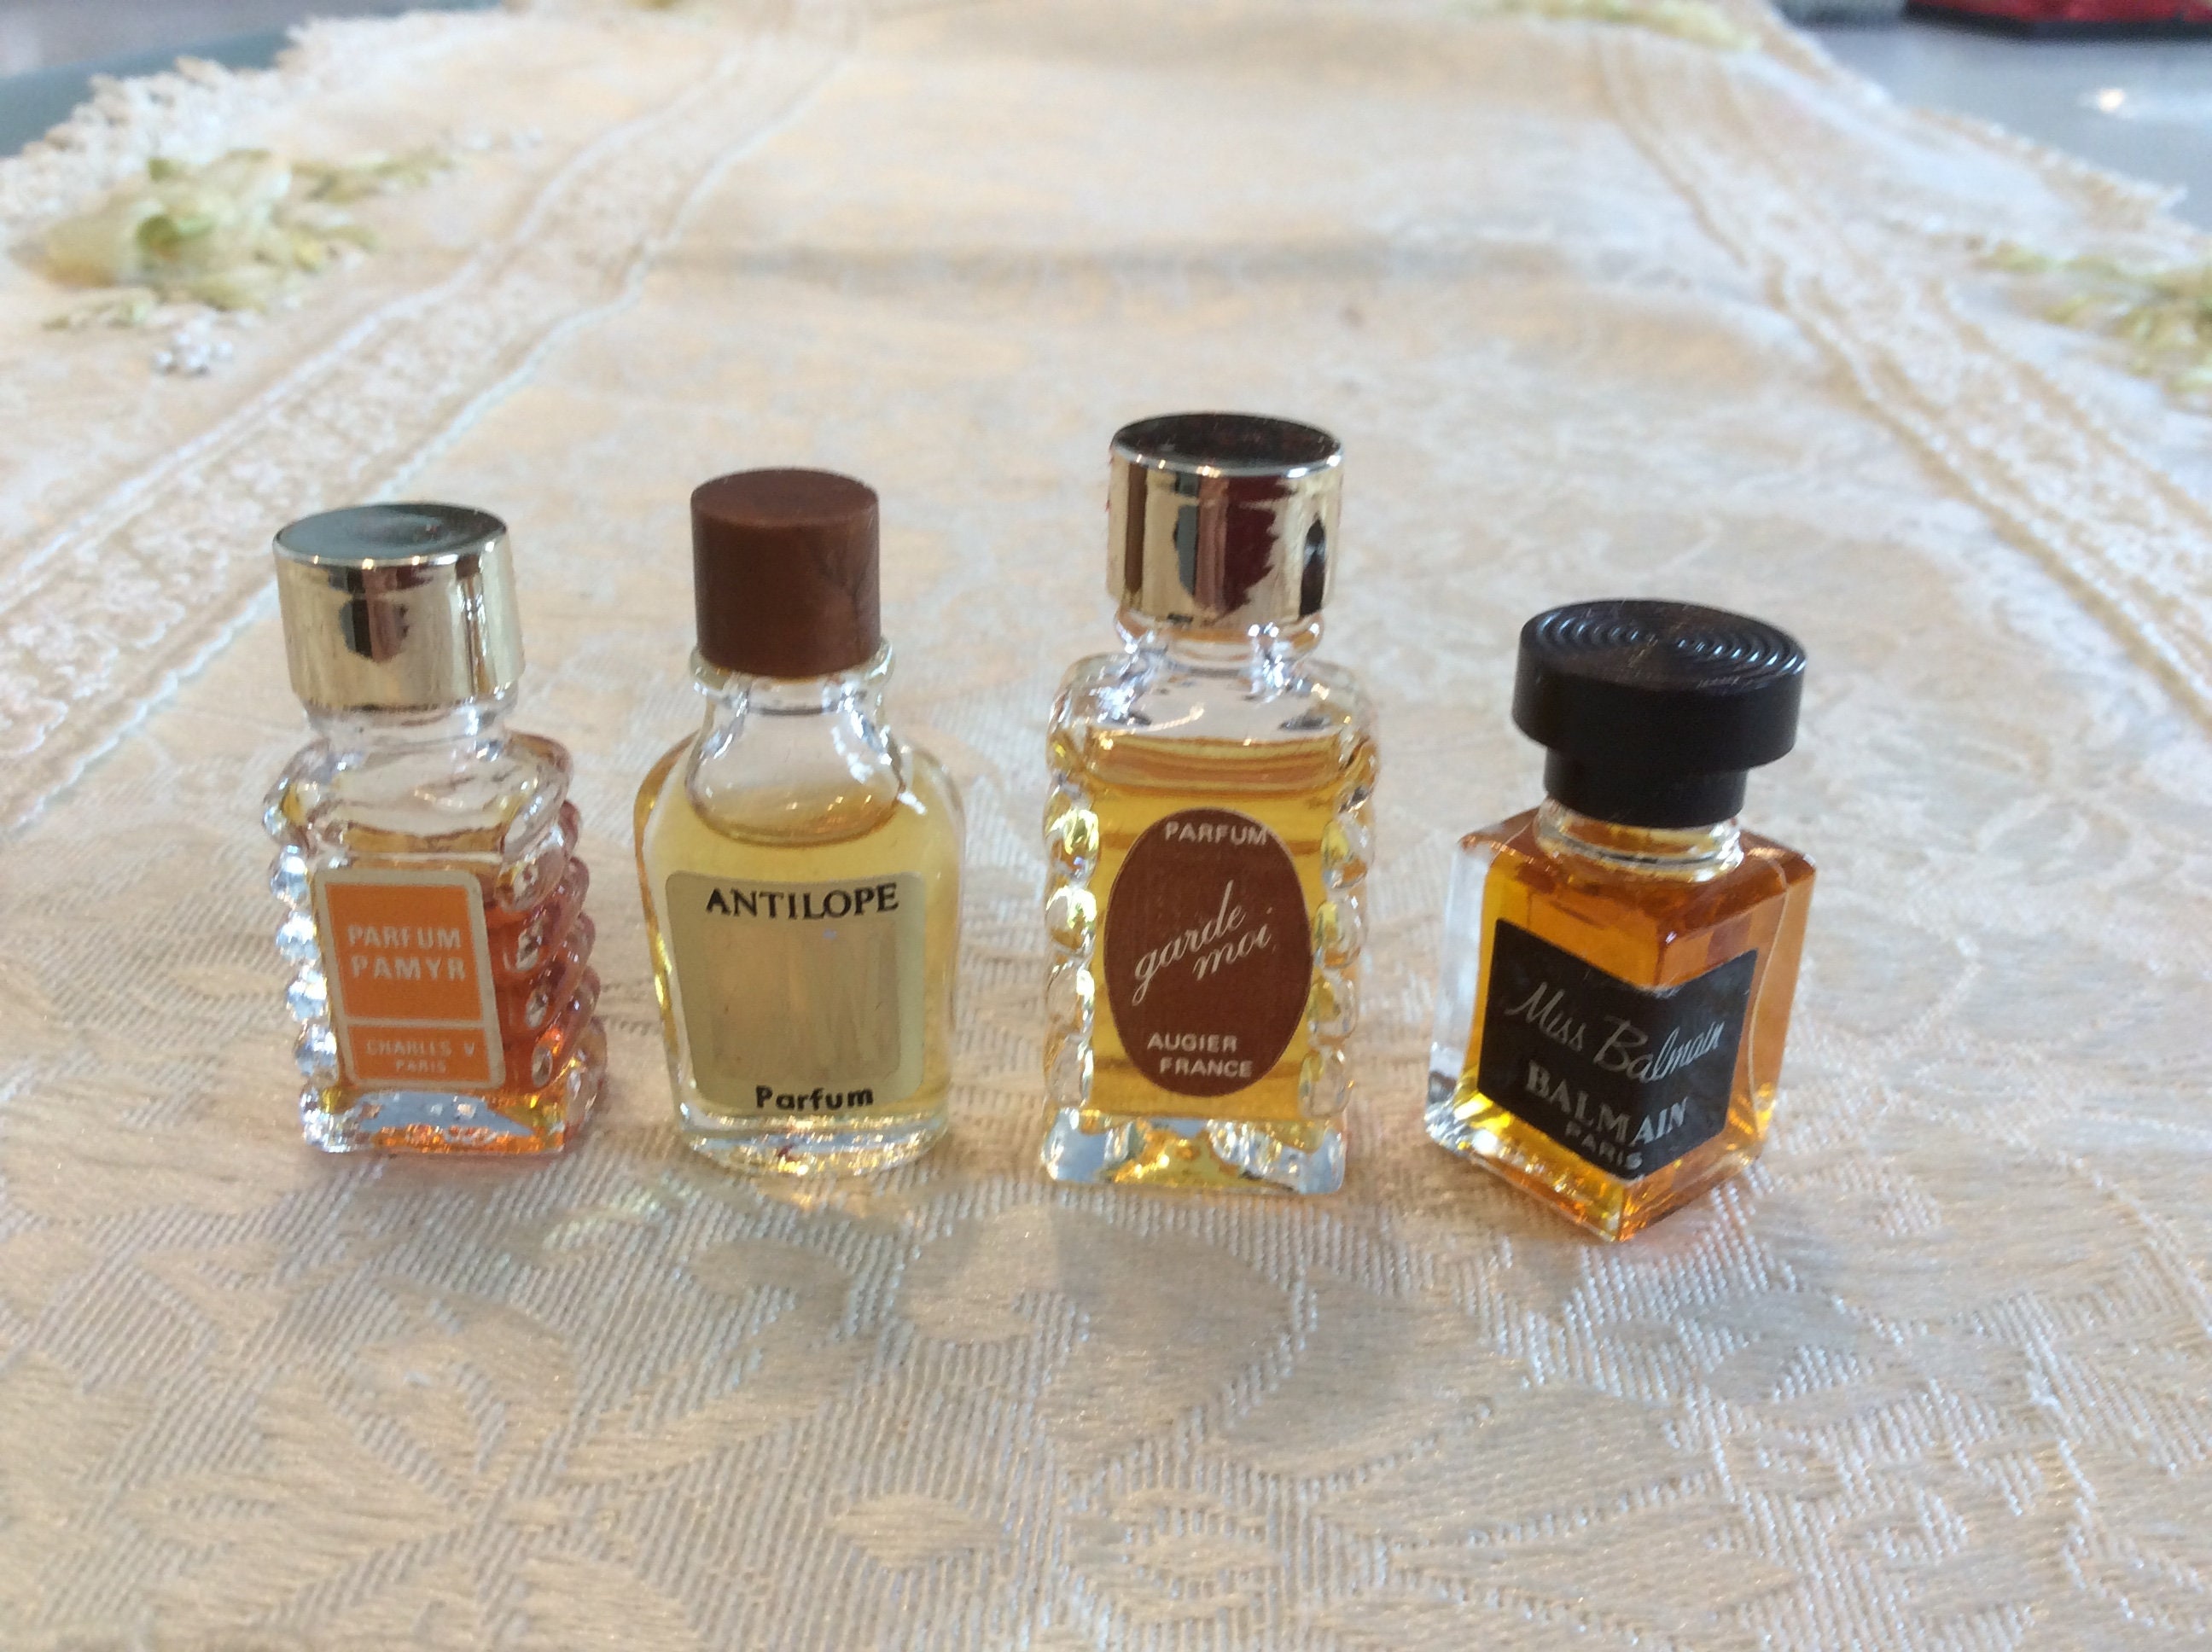 chanel mini perfume set price